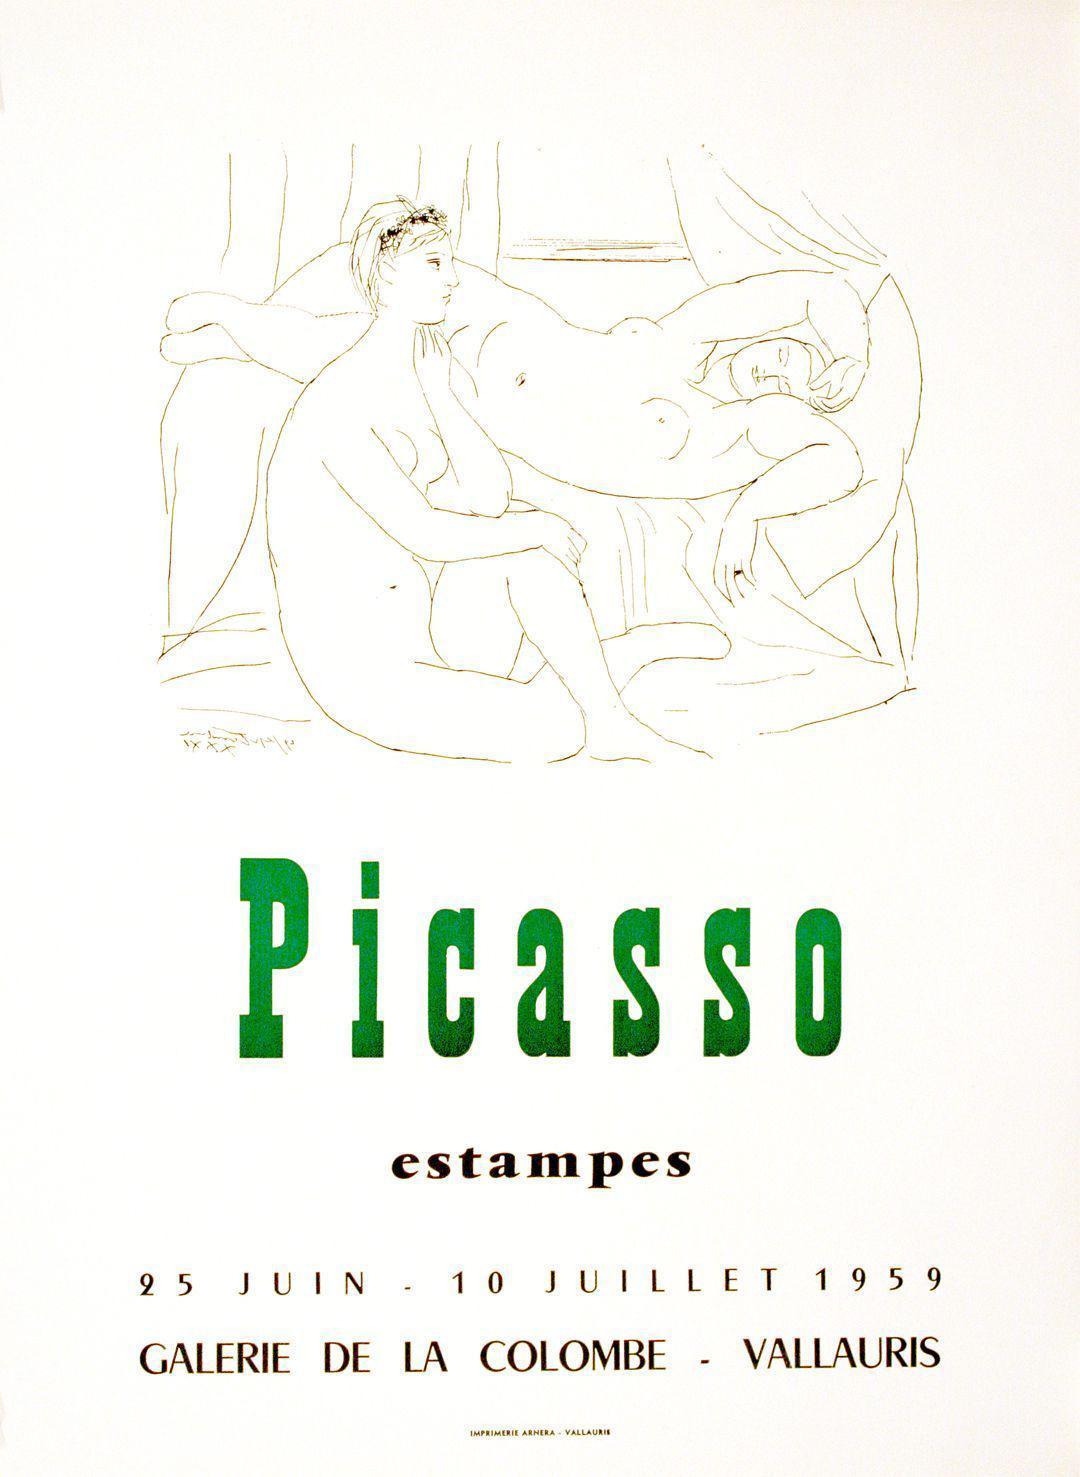 Pablo Picasso Original 1959 Poster for Exhibition at Galerie de la Colombe